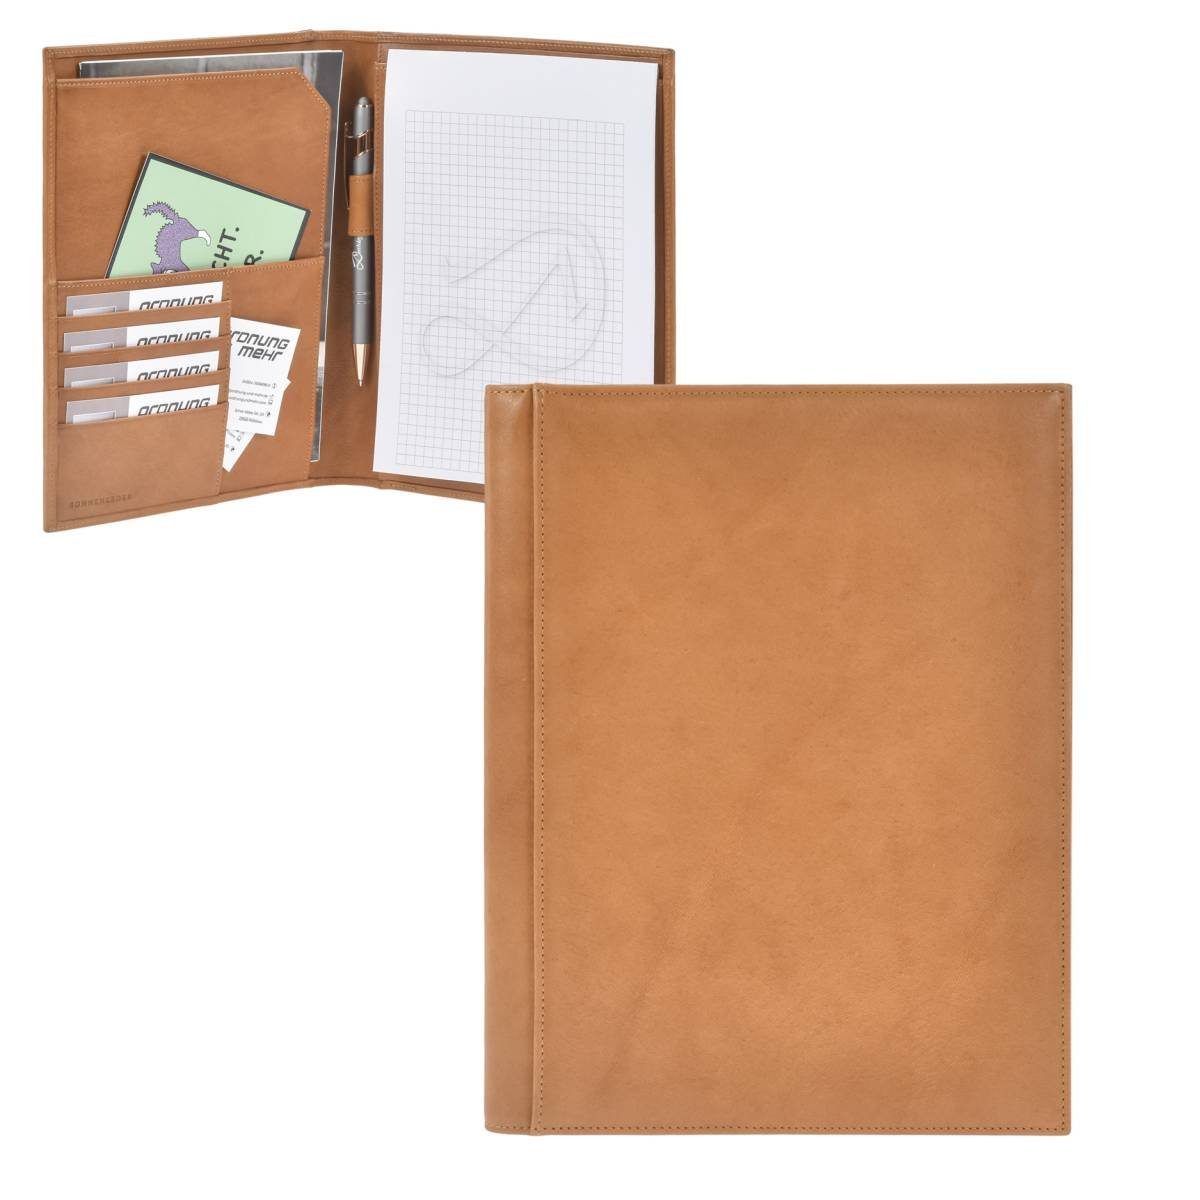 Sonnenleder Schreibmappe Tucholsky, Mappe, A5 Format, Leder, 18,5x23 cm | Konferenzmappen